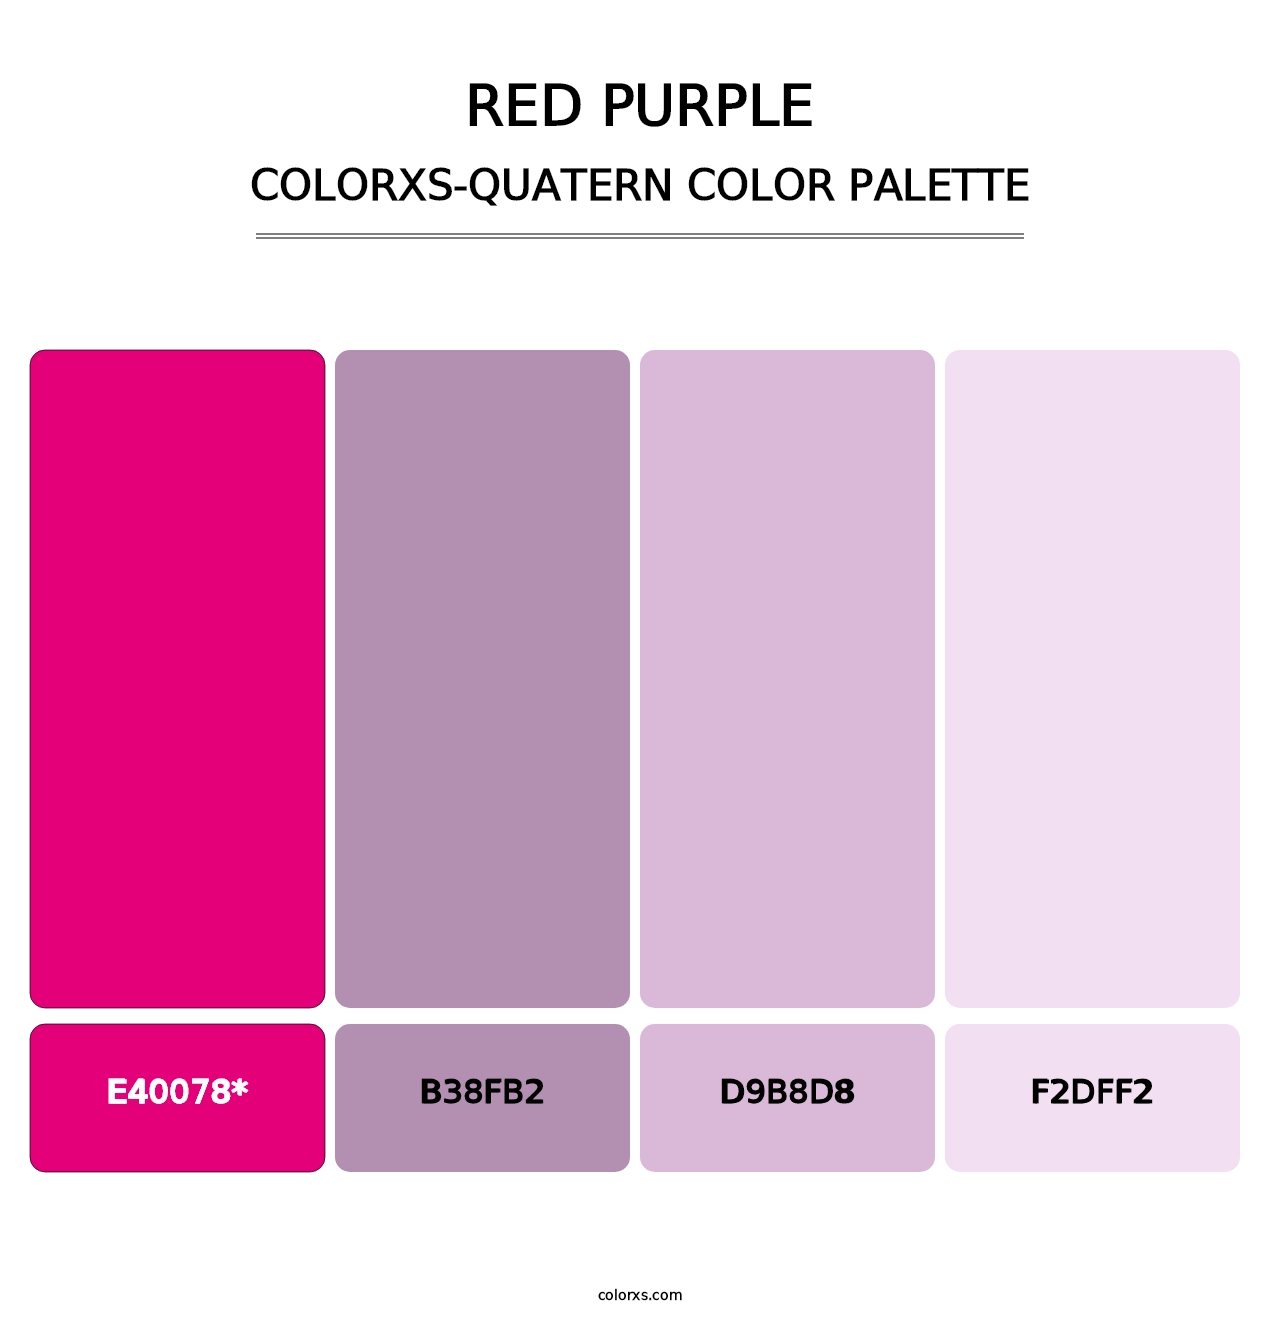 Red Purple - Colorxs Quatern Palette